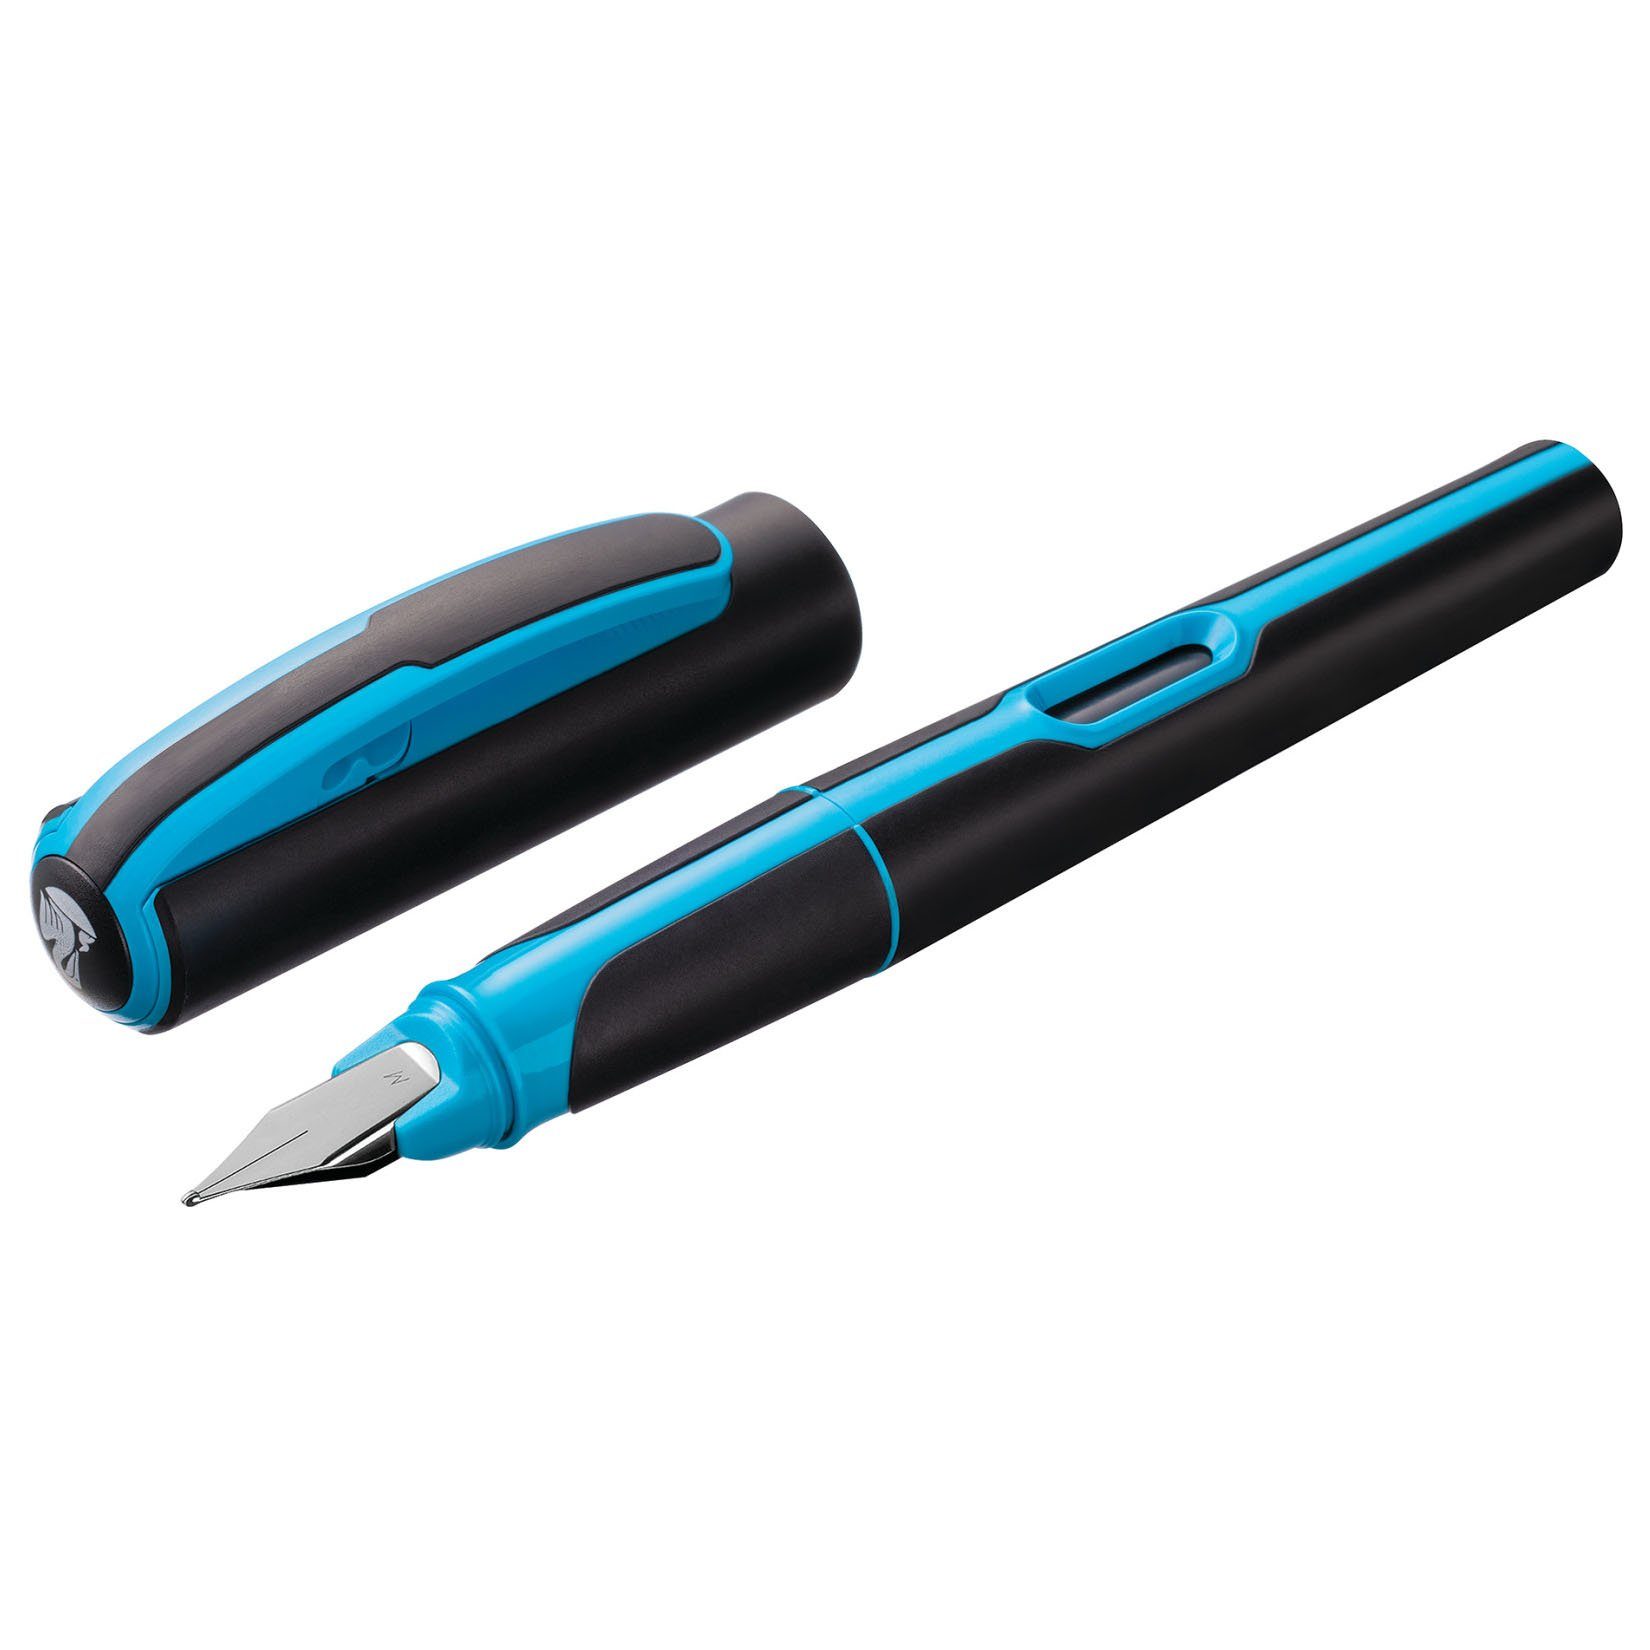 Pelikan Ilo P475 Fountain Pen (Blue)